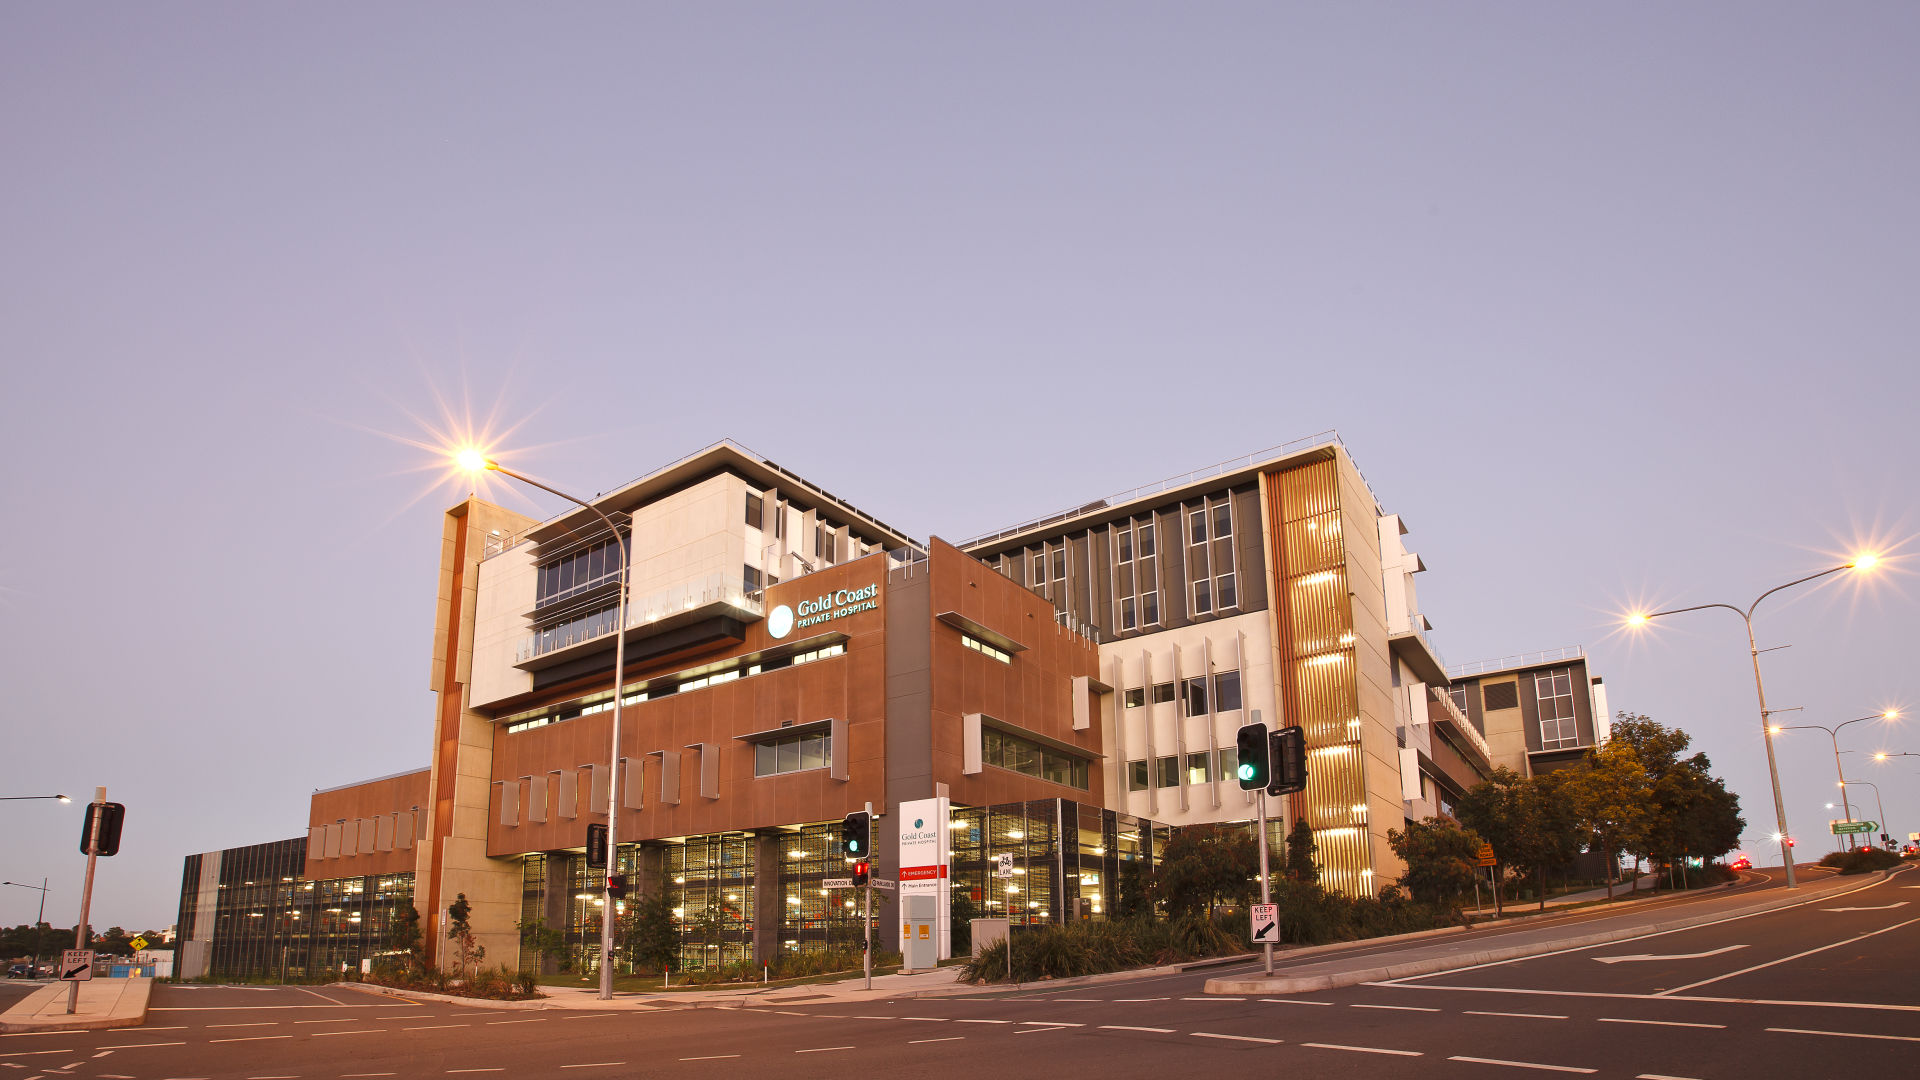 Gold Coast Private Hospital